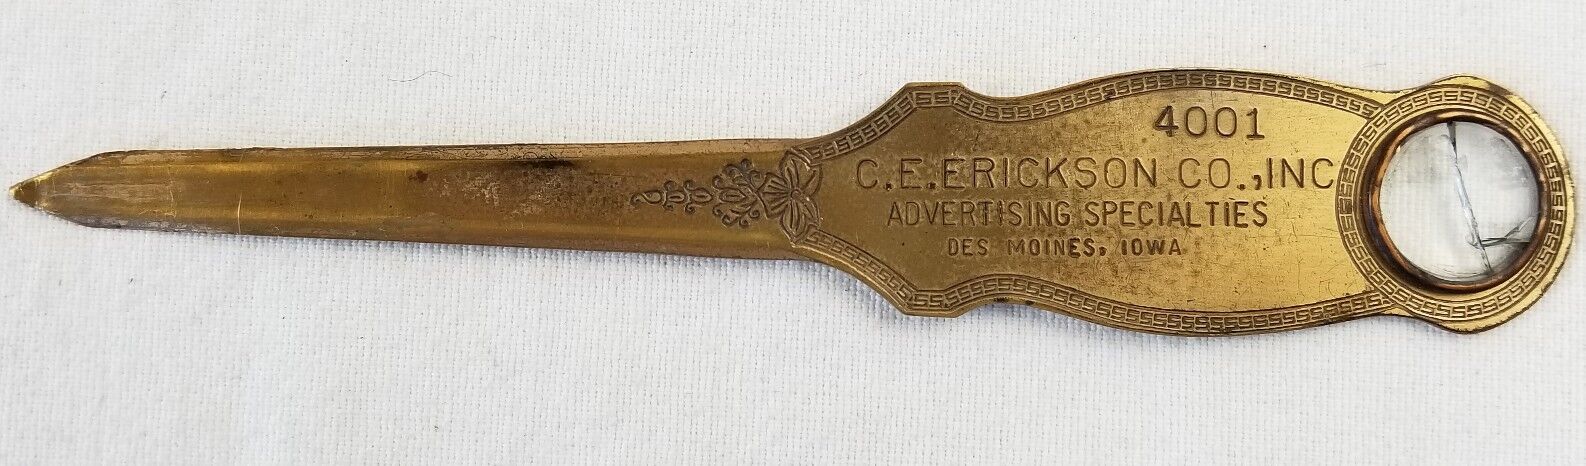 Vintage Advertising C.E. Erickson Co. Iowa Letter Opener brass magnifier rare 